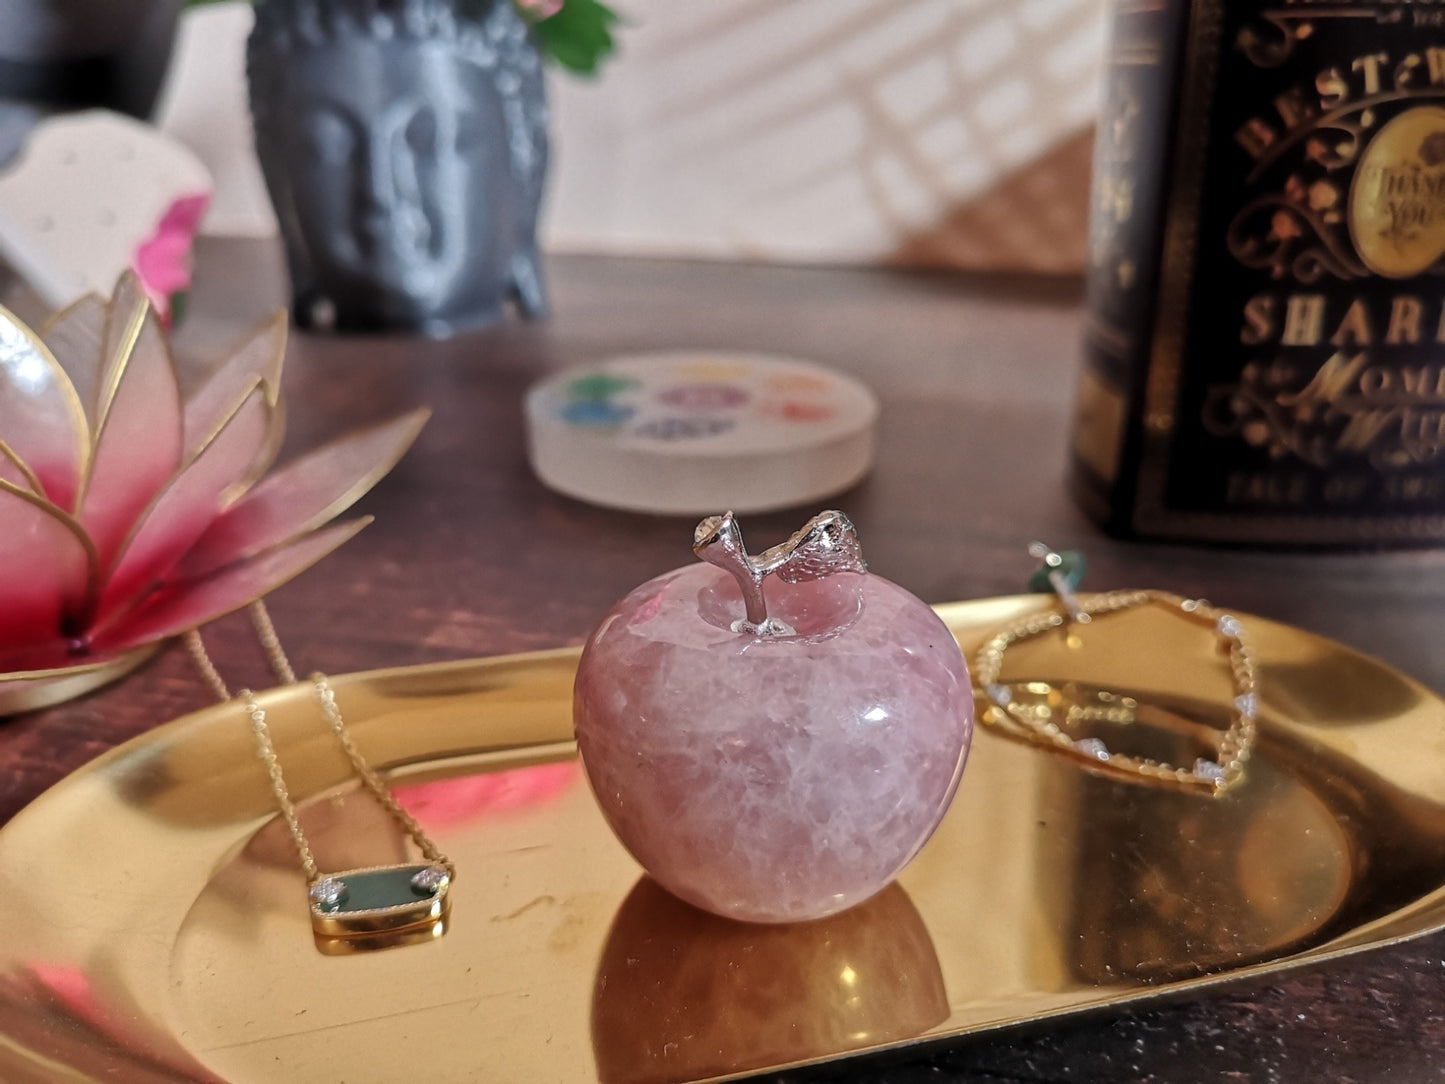 Pomme en quartz rose